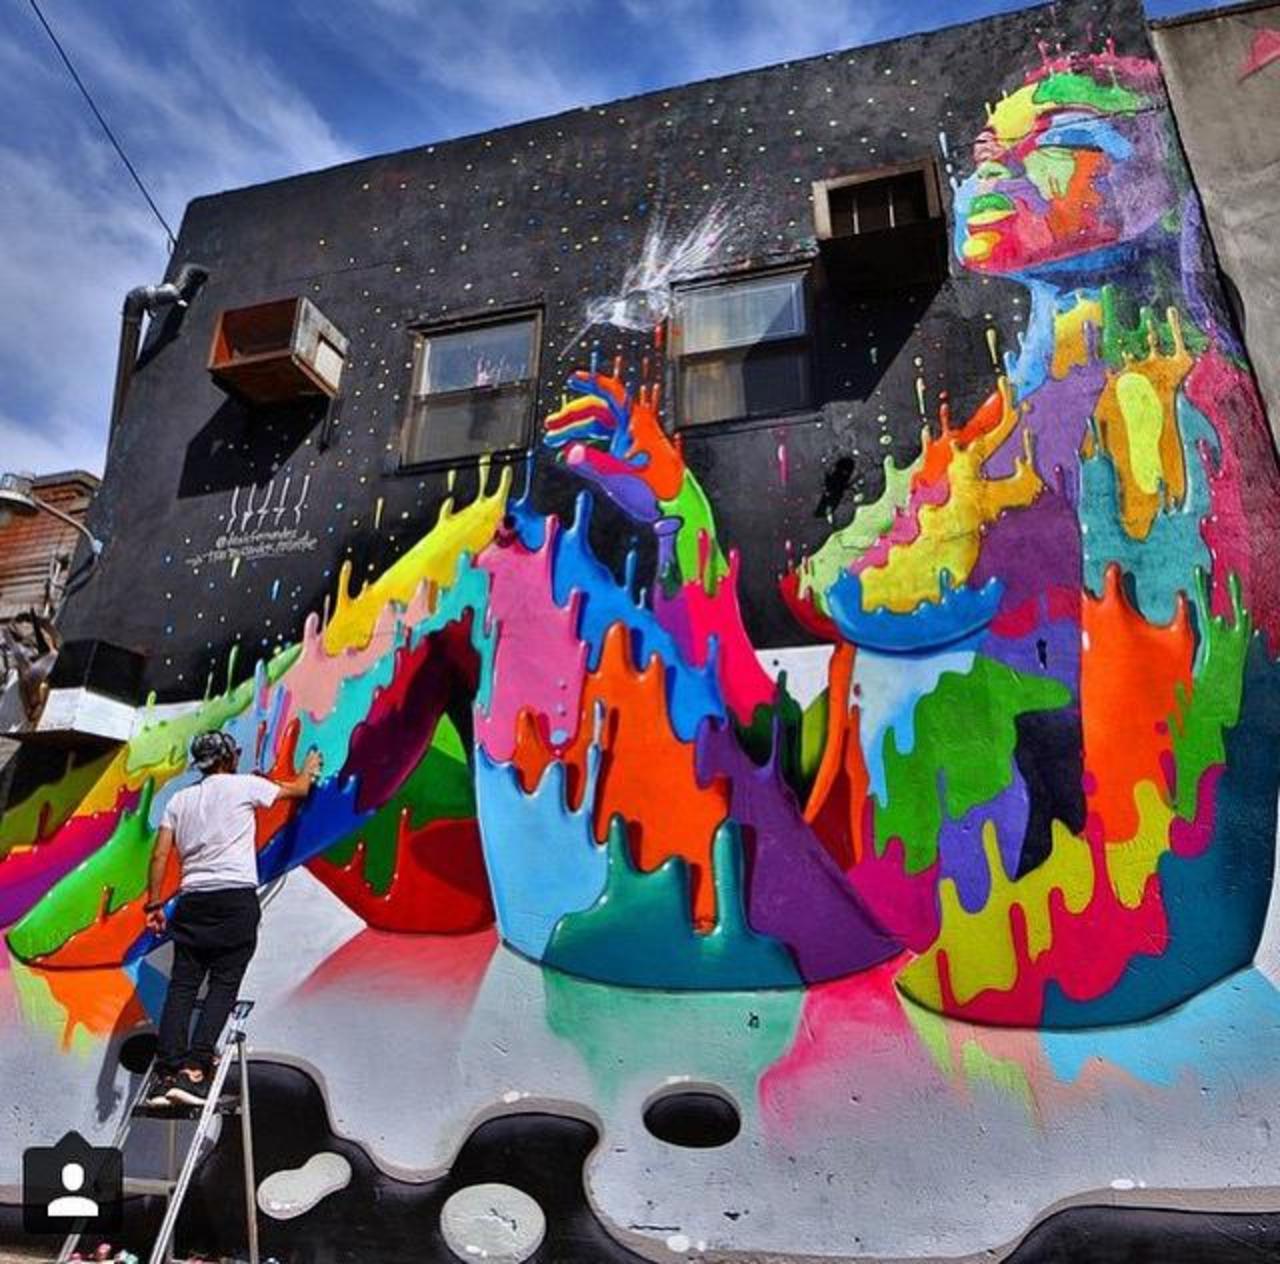 New Street Art by Dasic Fernandez for the TheBKcollective  

#art #arte #graffiti #streetart http://t.co/BIGC1RrjR5